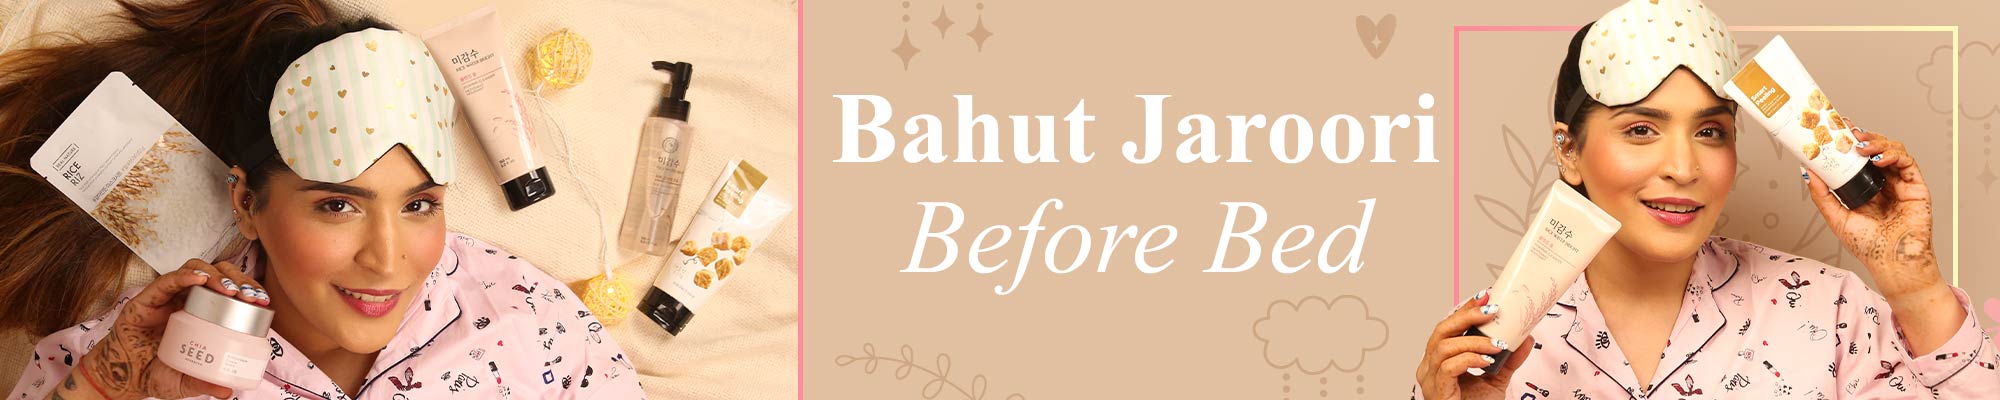 Bahut Jaroori Before Bed